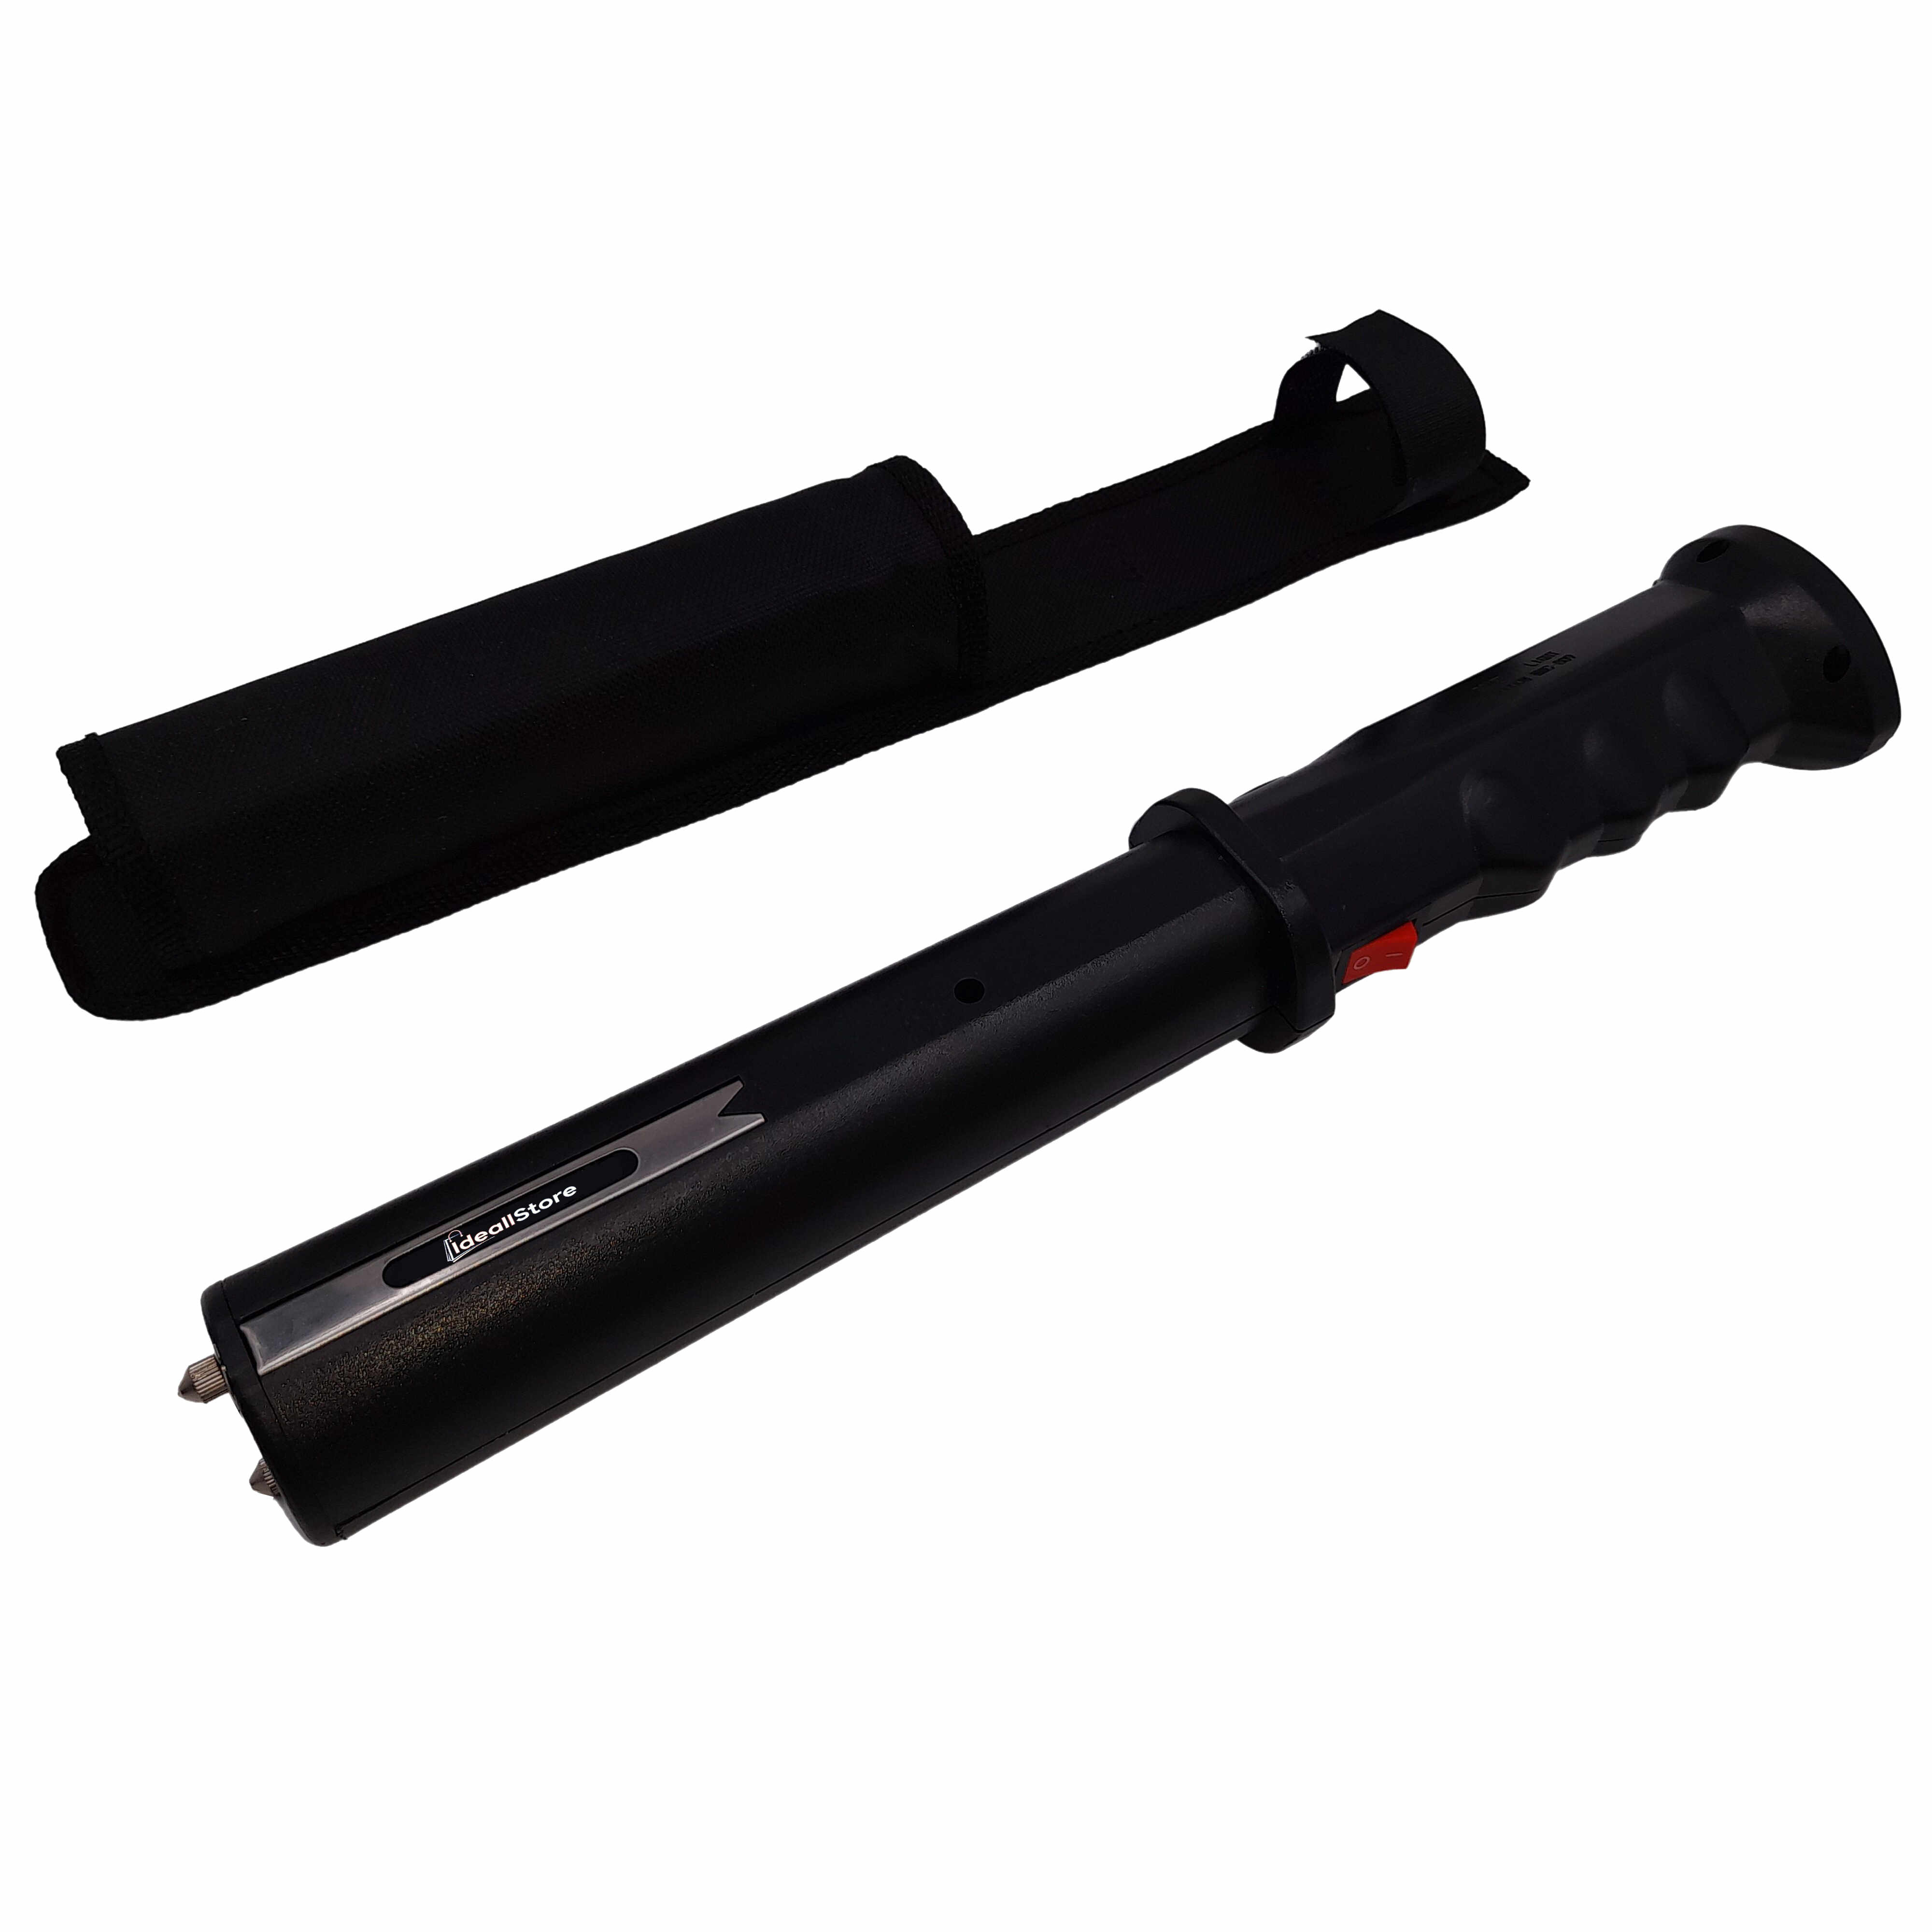 Baston cu electrosoc si lanterna IdeallStore®, Unit TW-809, plastic, 33.5 cm, negru, husa inclusa